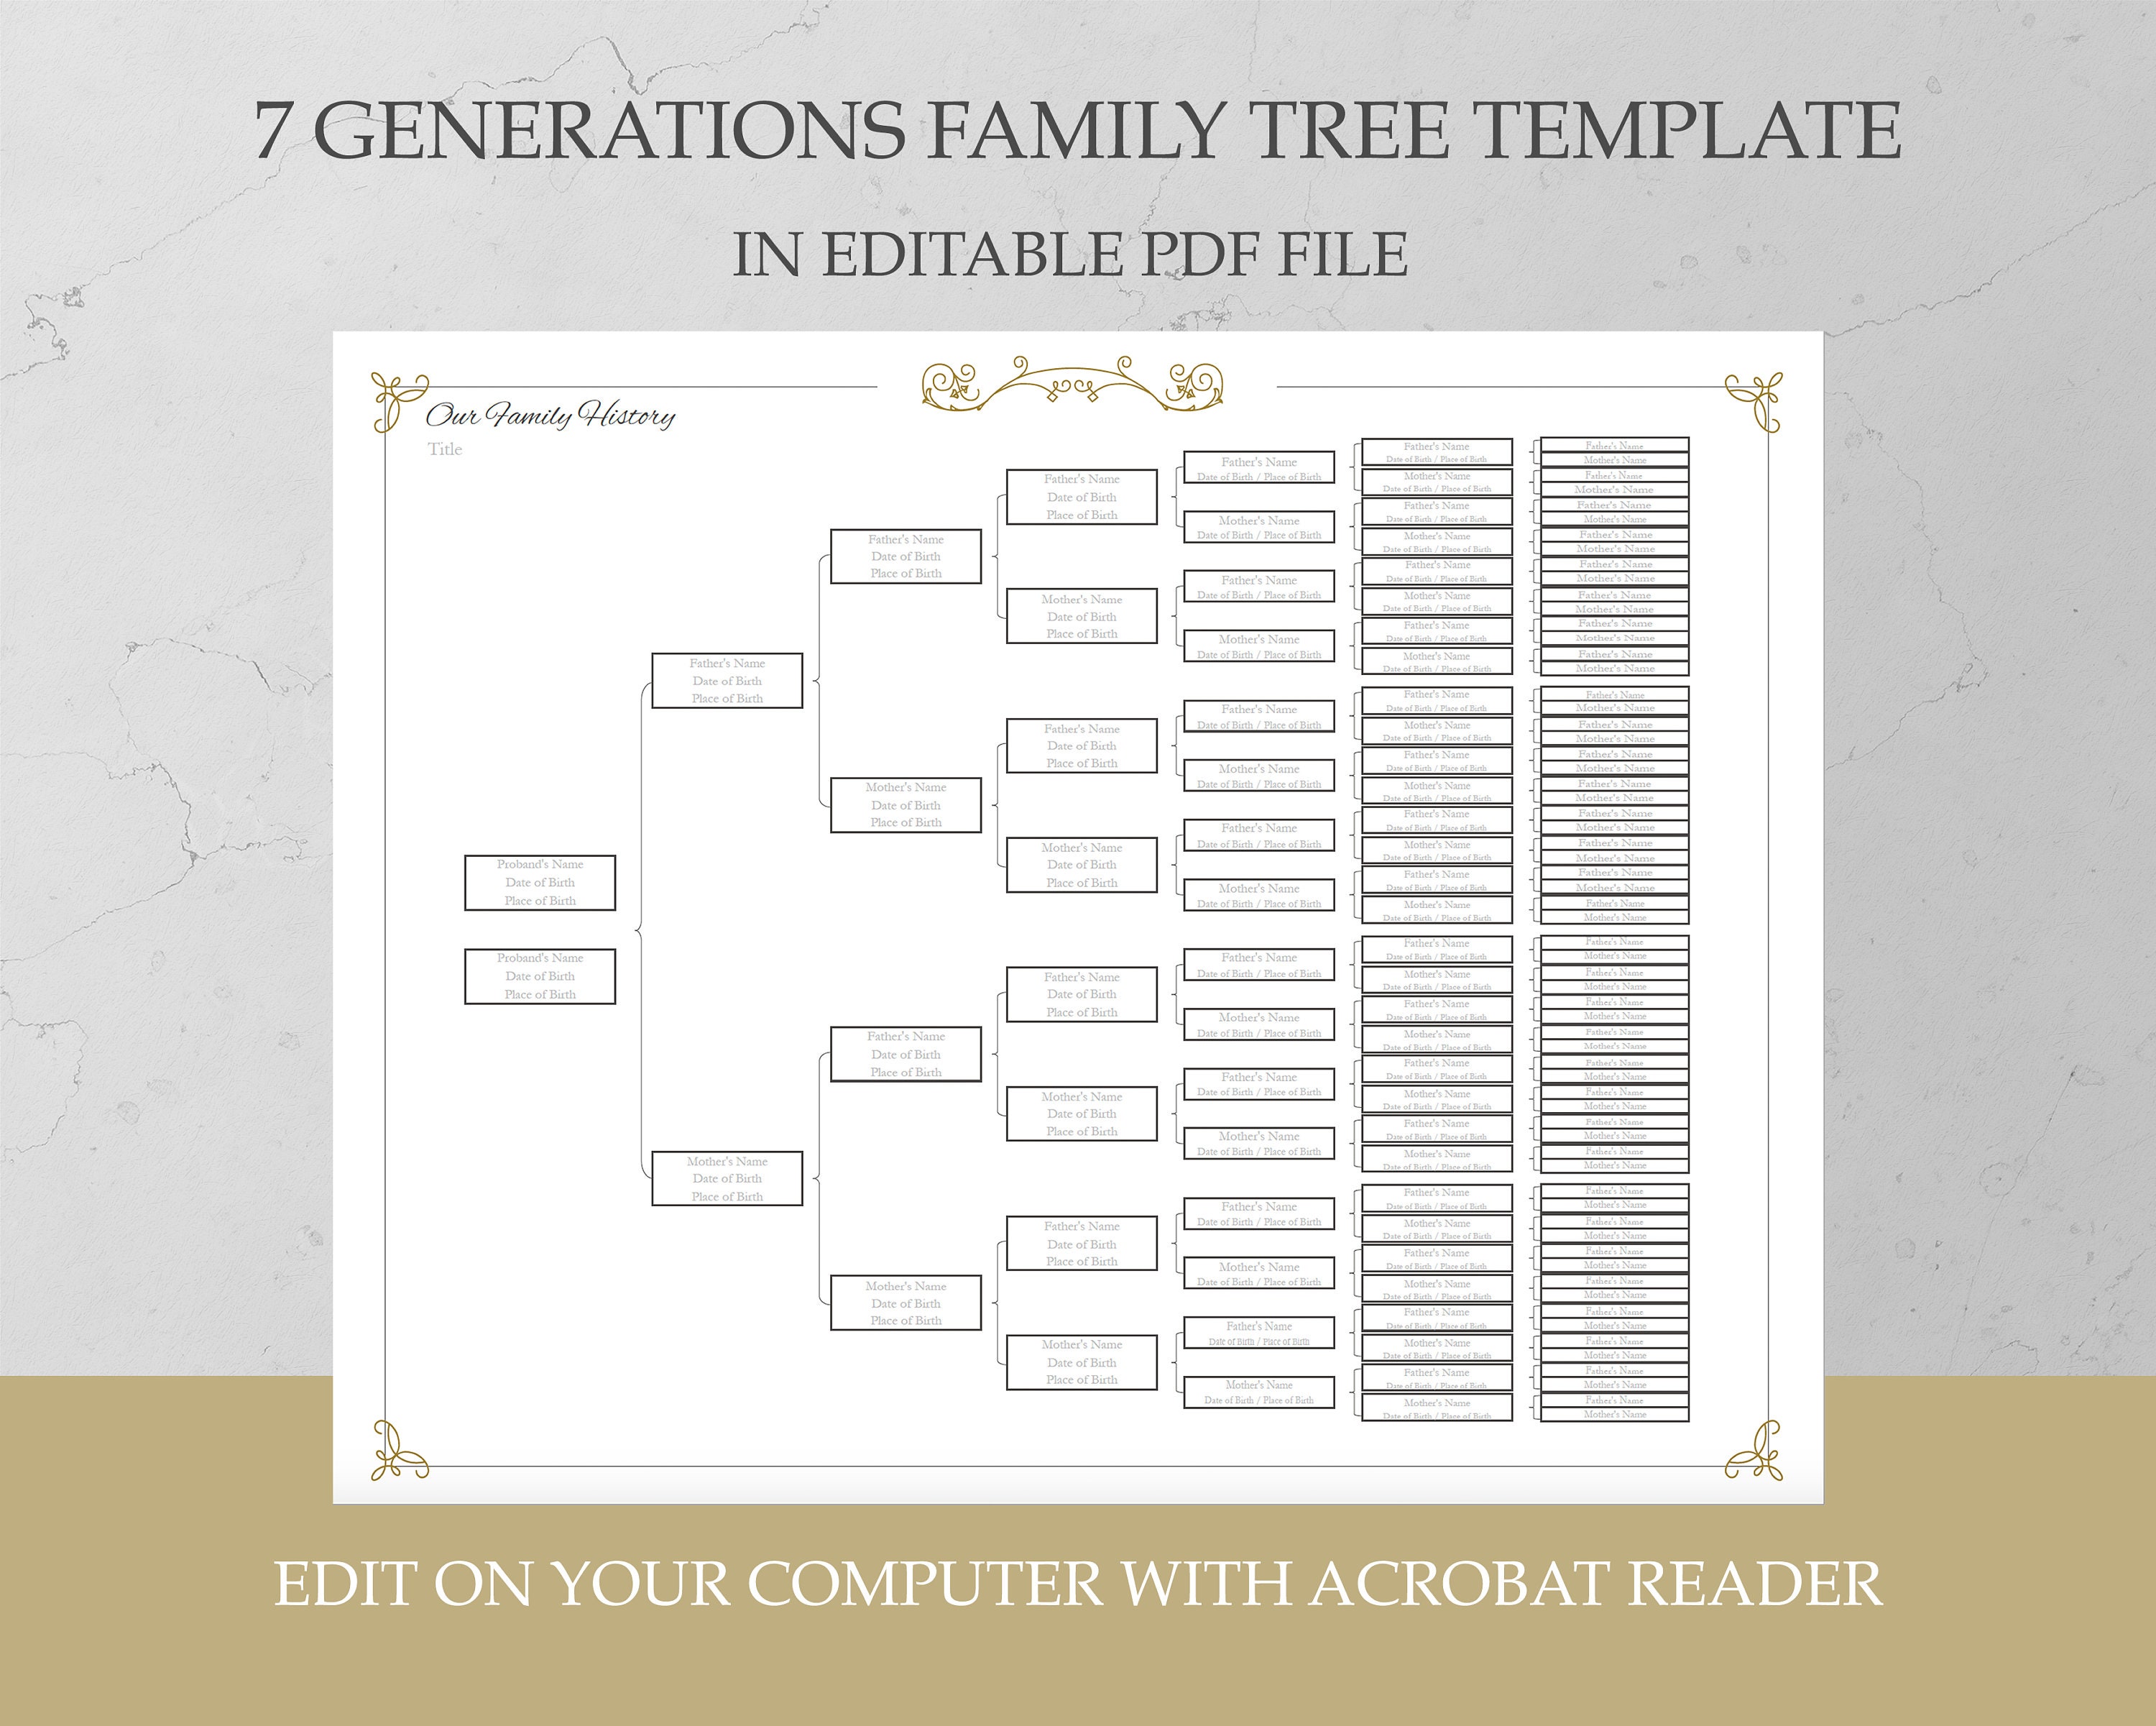 Fillable Family Tree Template Editable Genealogy Chart Family Tree ...